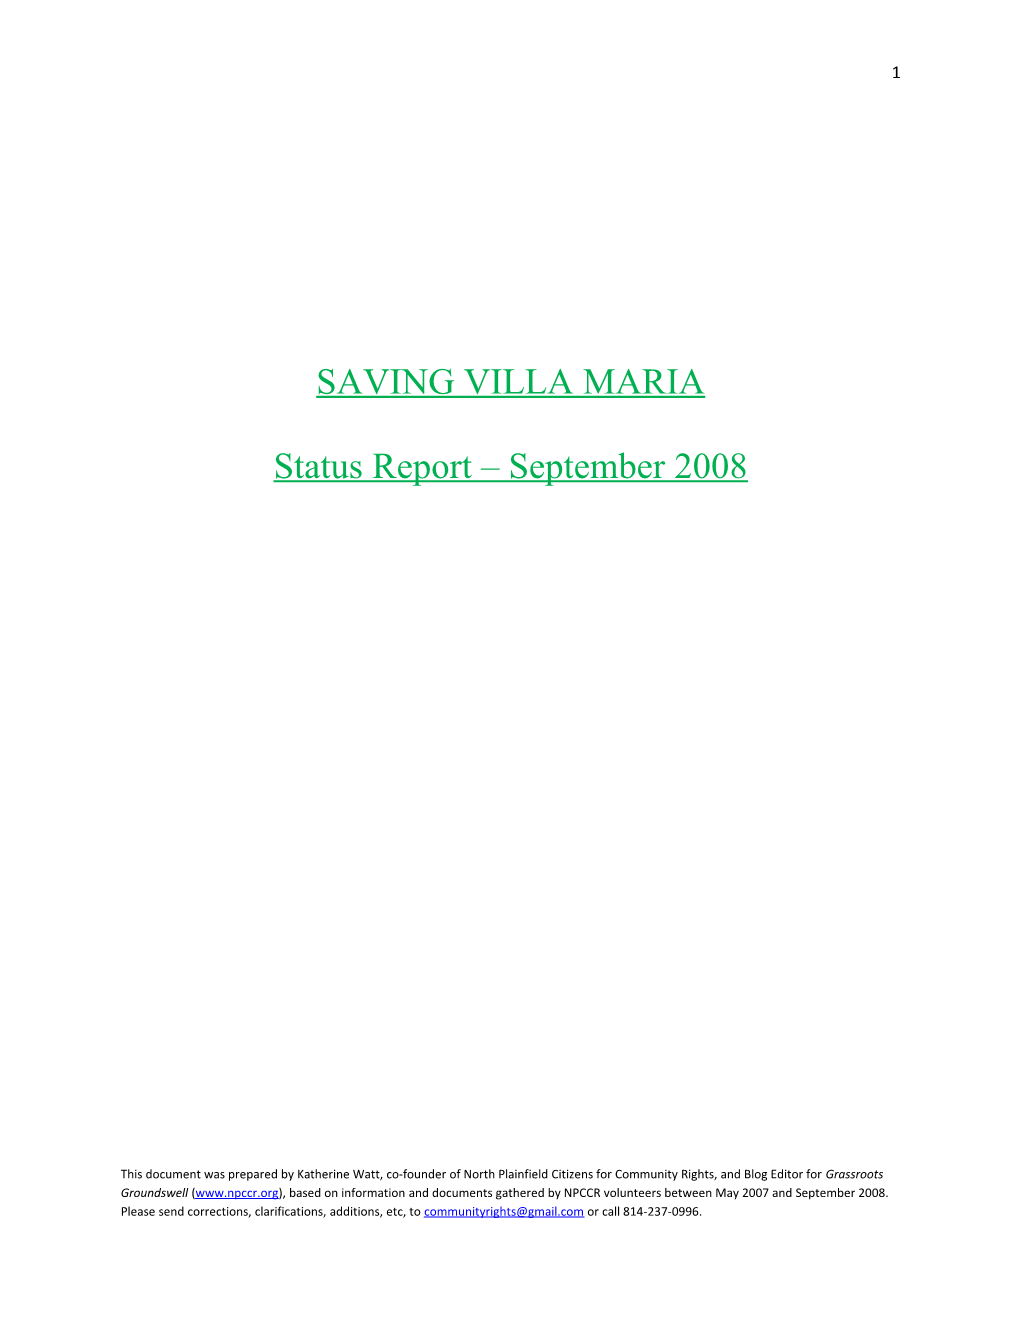 Villa Maria Fact Sheet: Last Updated 9/22/08